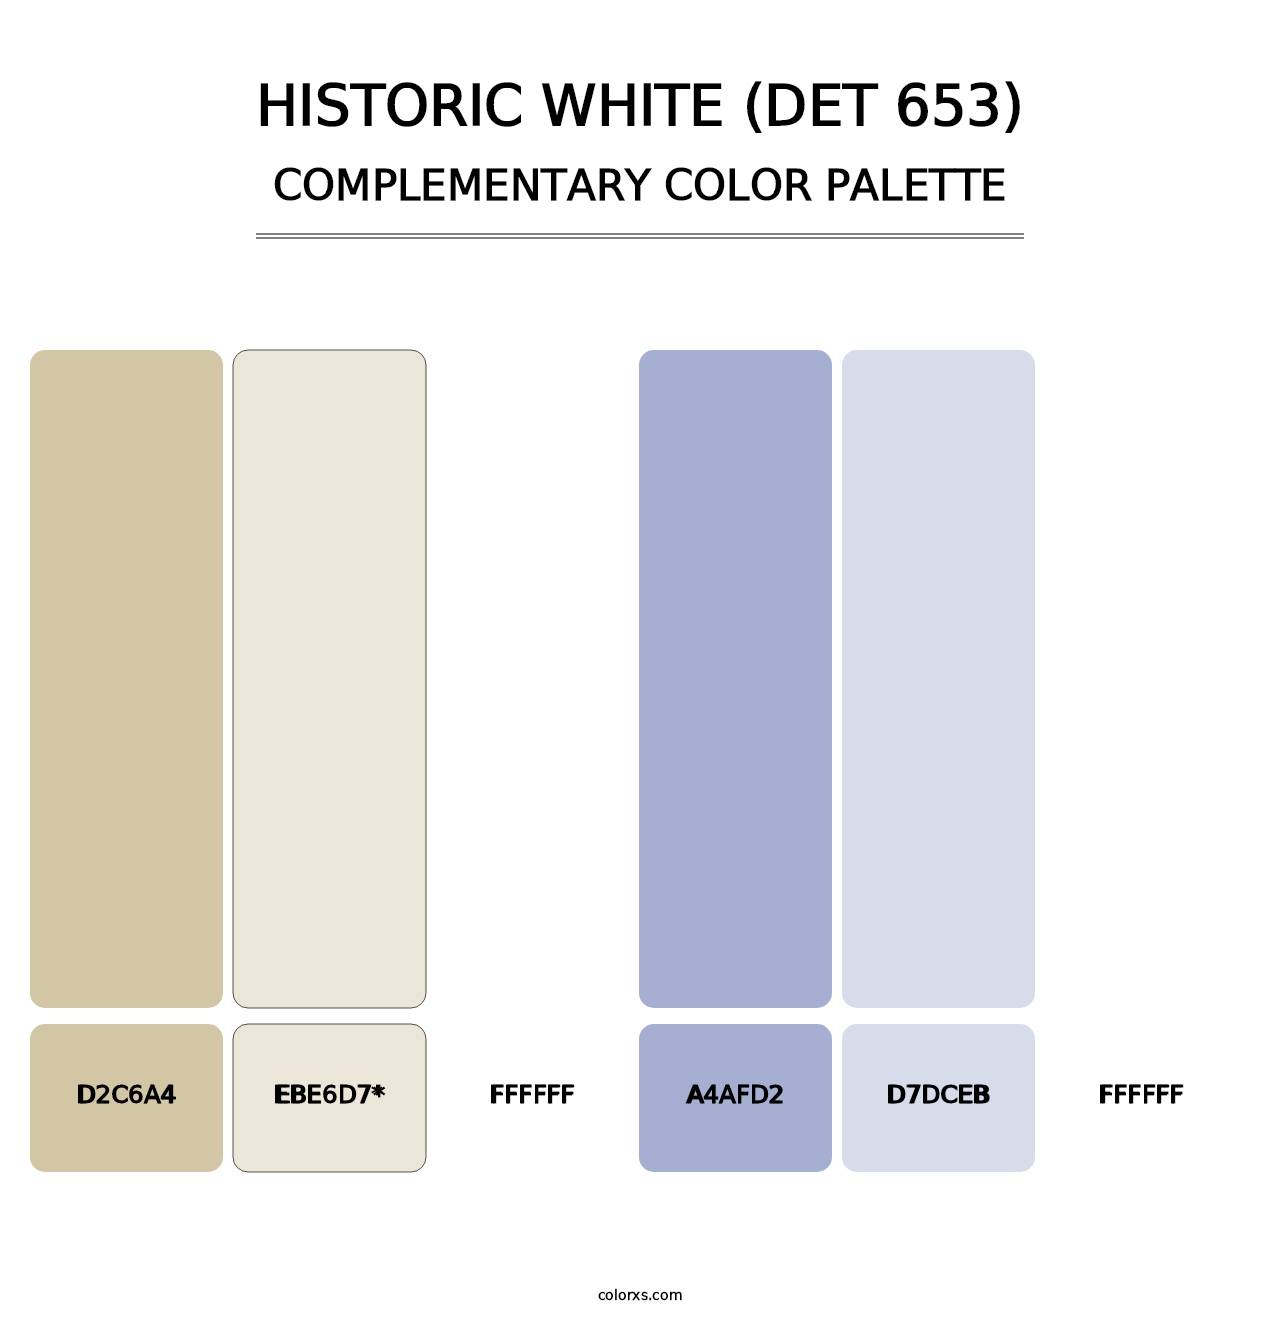 Historic White (DET 653) - Complementary Color Palette